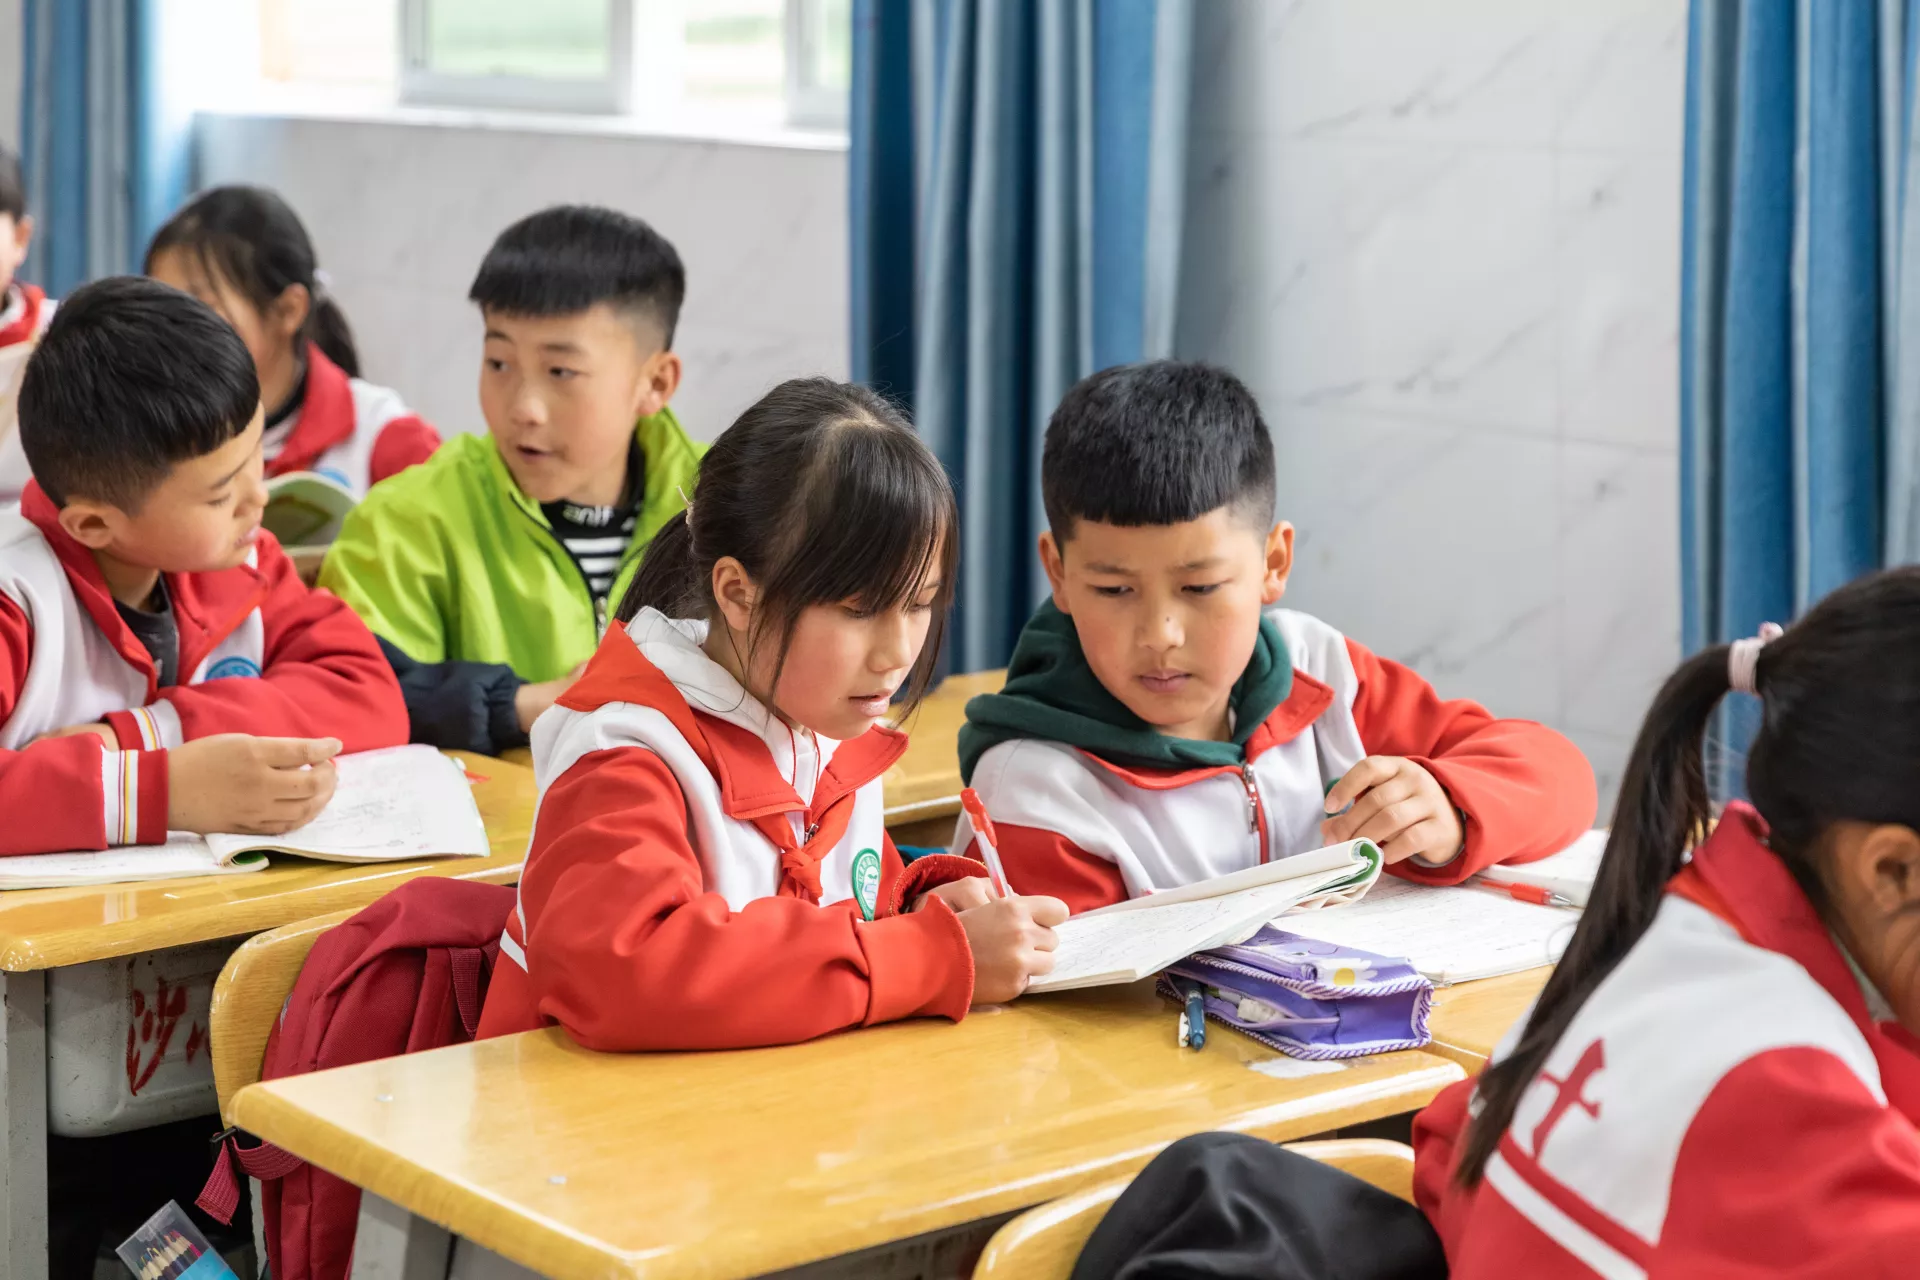 In an elementary school in Guizhou, children are having a Social Emotional Learning class.